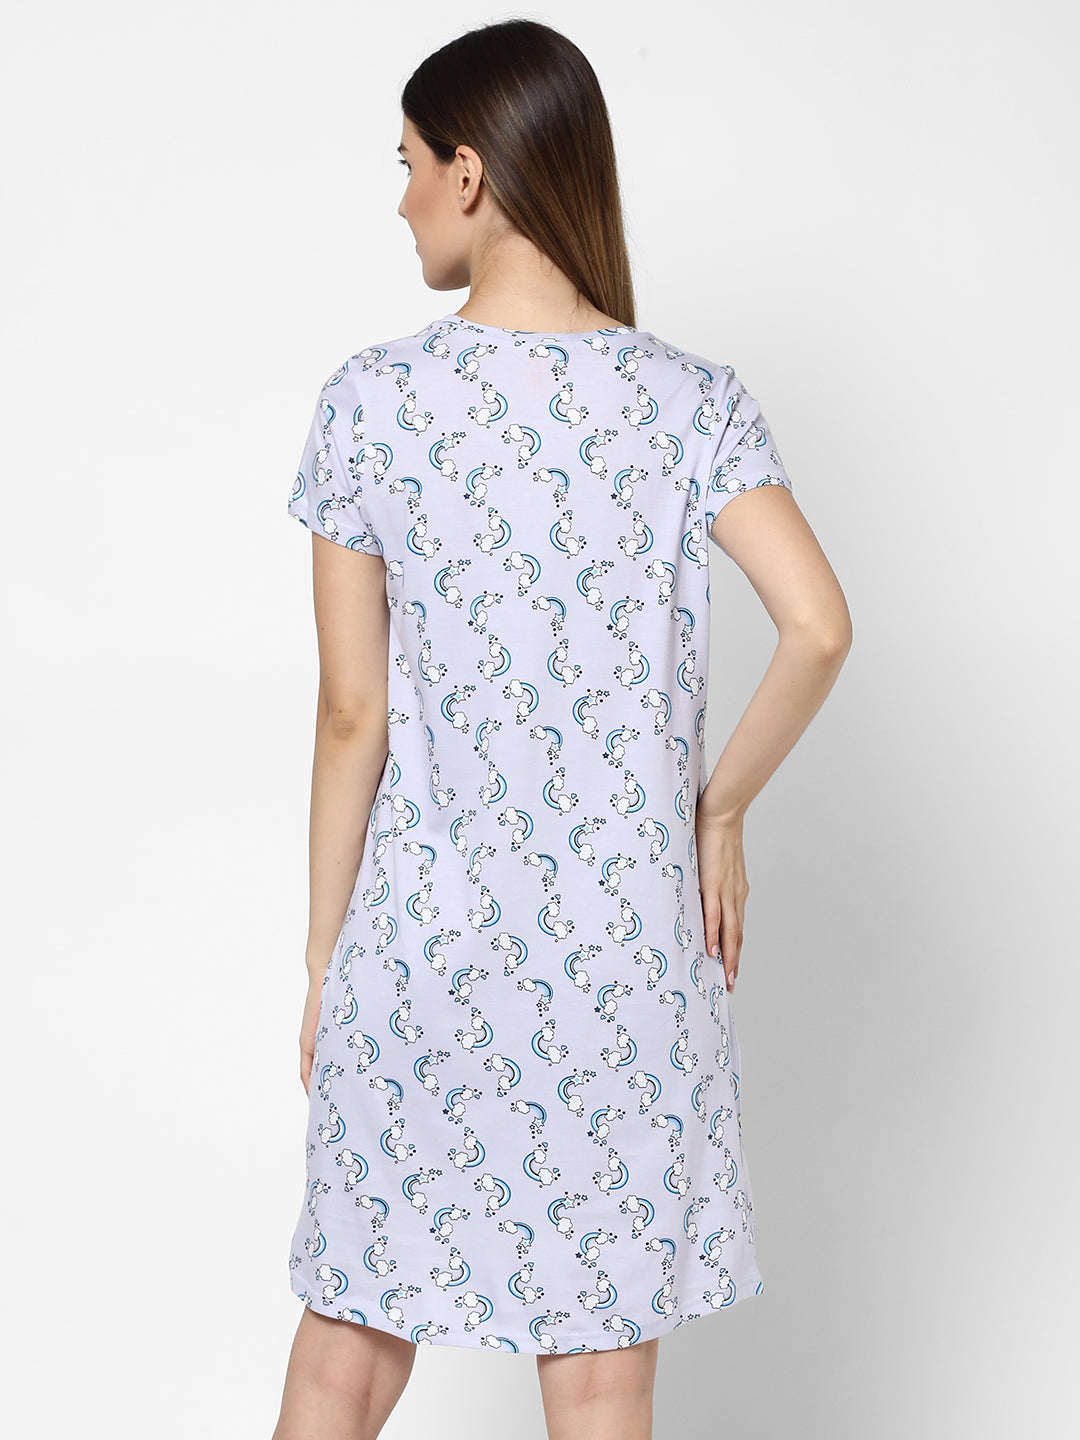 evolove women's rainow print with you go girl printed knee length nightgown/short nighty/longpolo, 100% cotton, super soft, trendy design